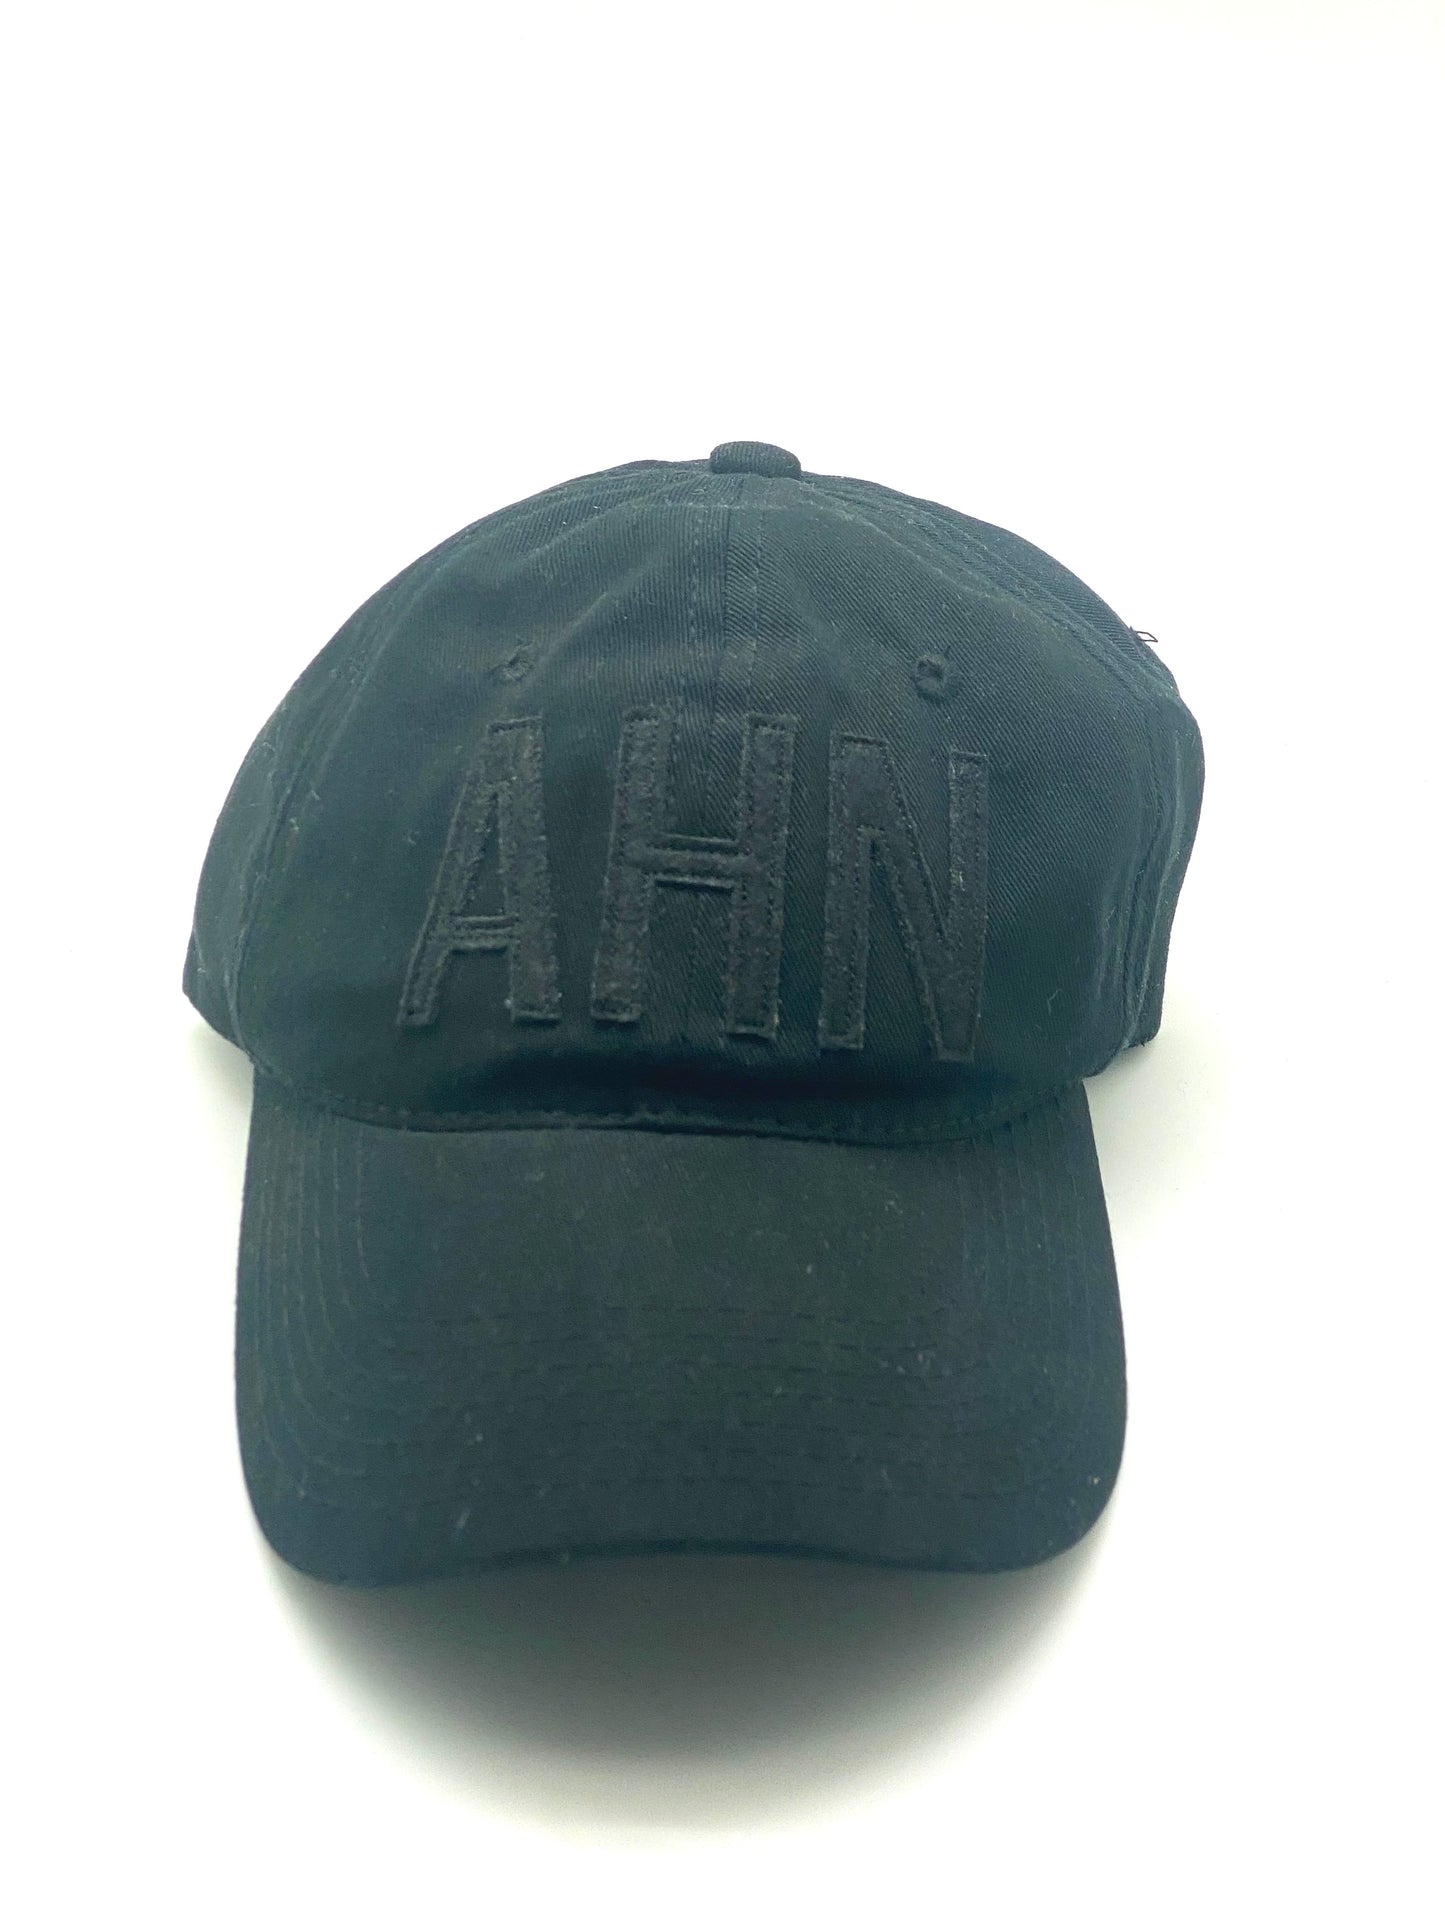 AHN - Athens, GA Hat